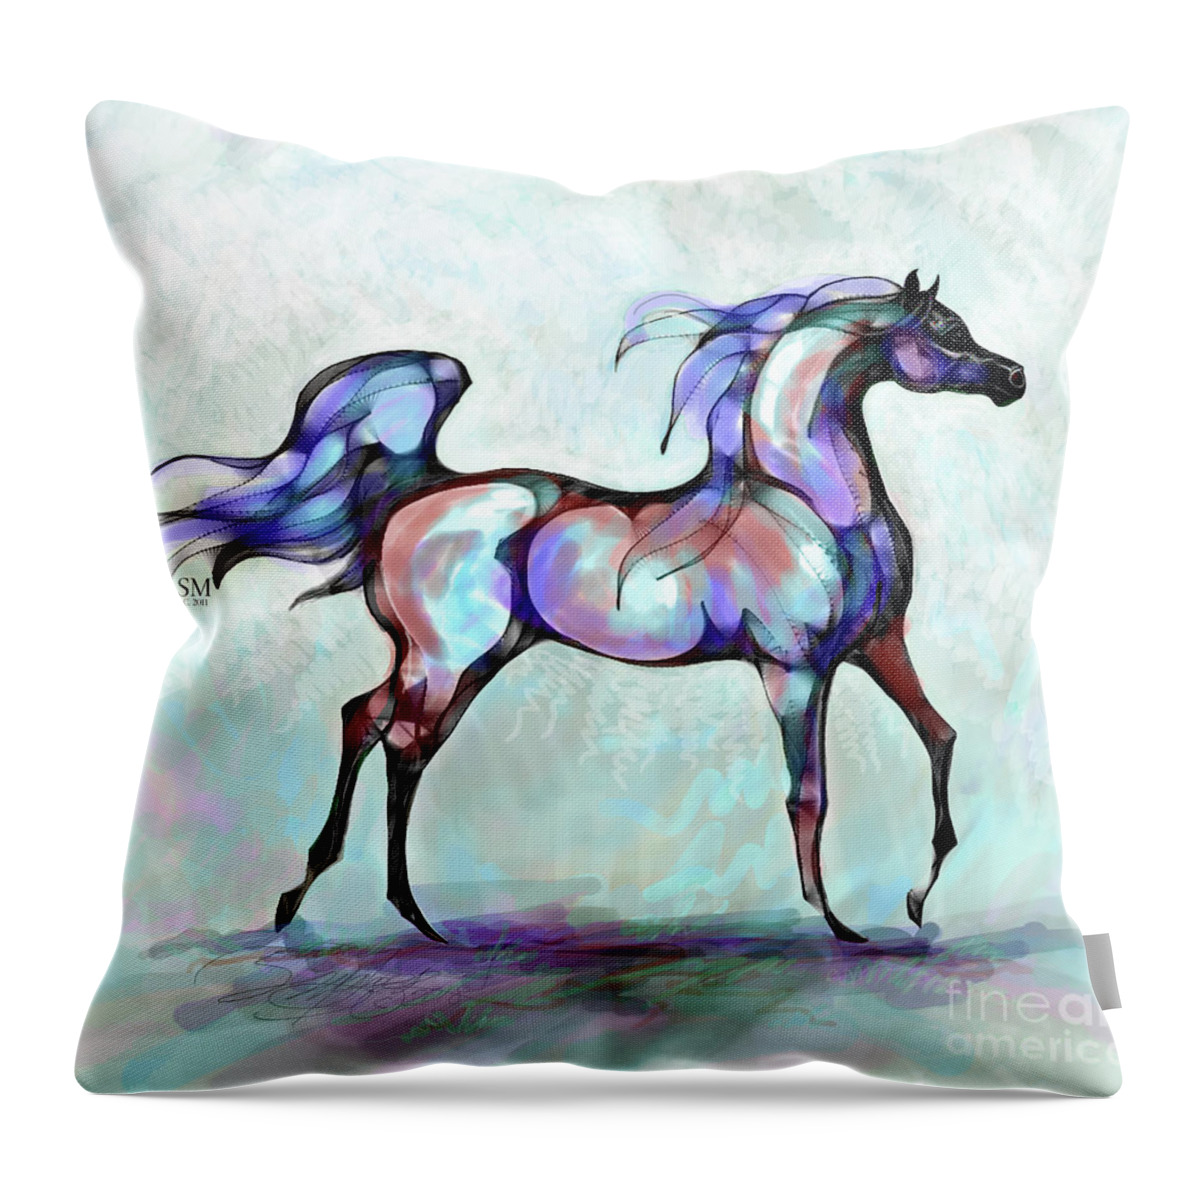 Stacey Mayer Throw Pillow featuring the digital art Arabian Horse Overlook by Stacey Mayer